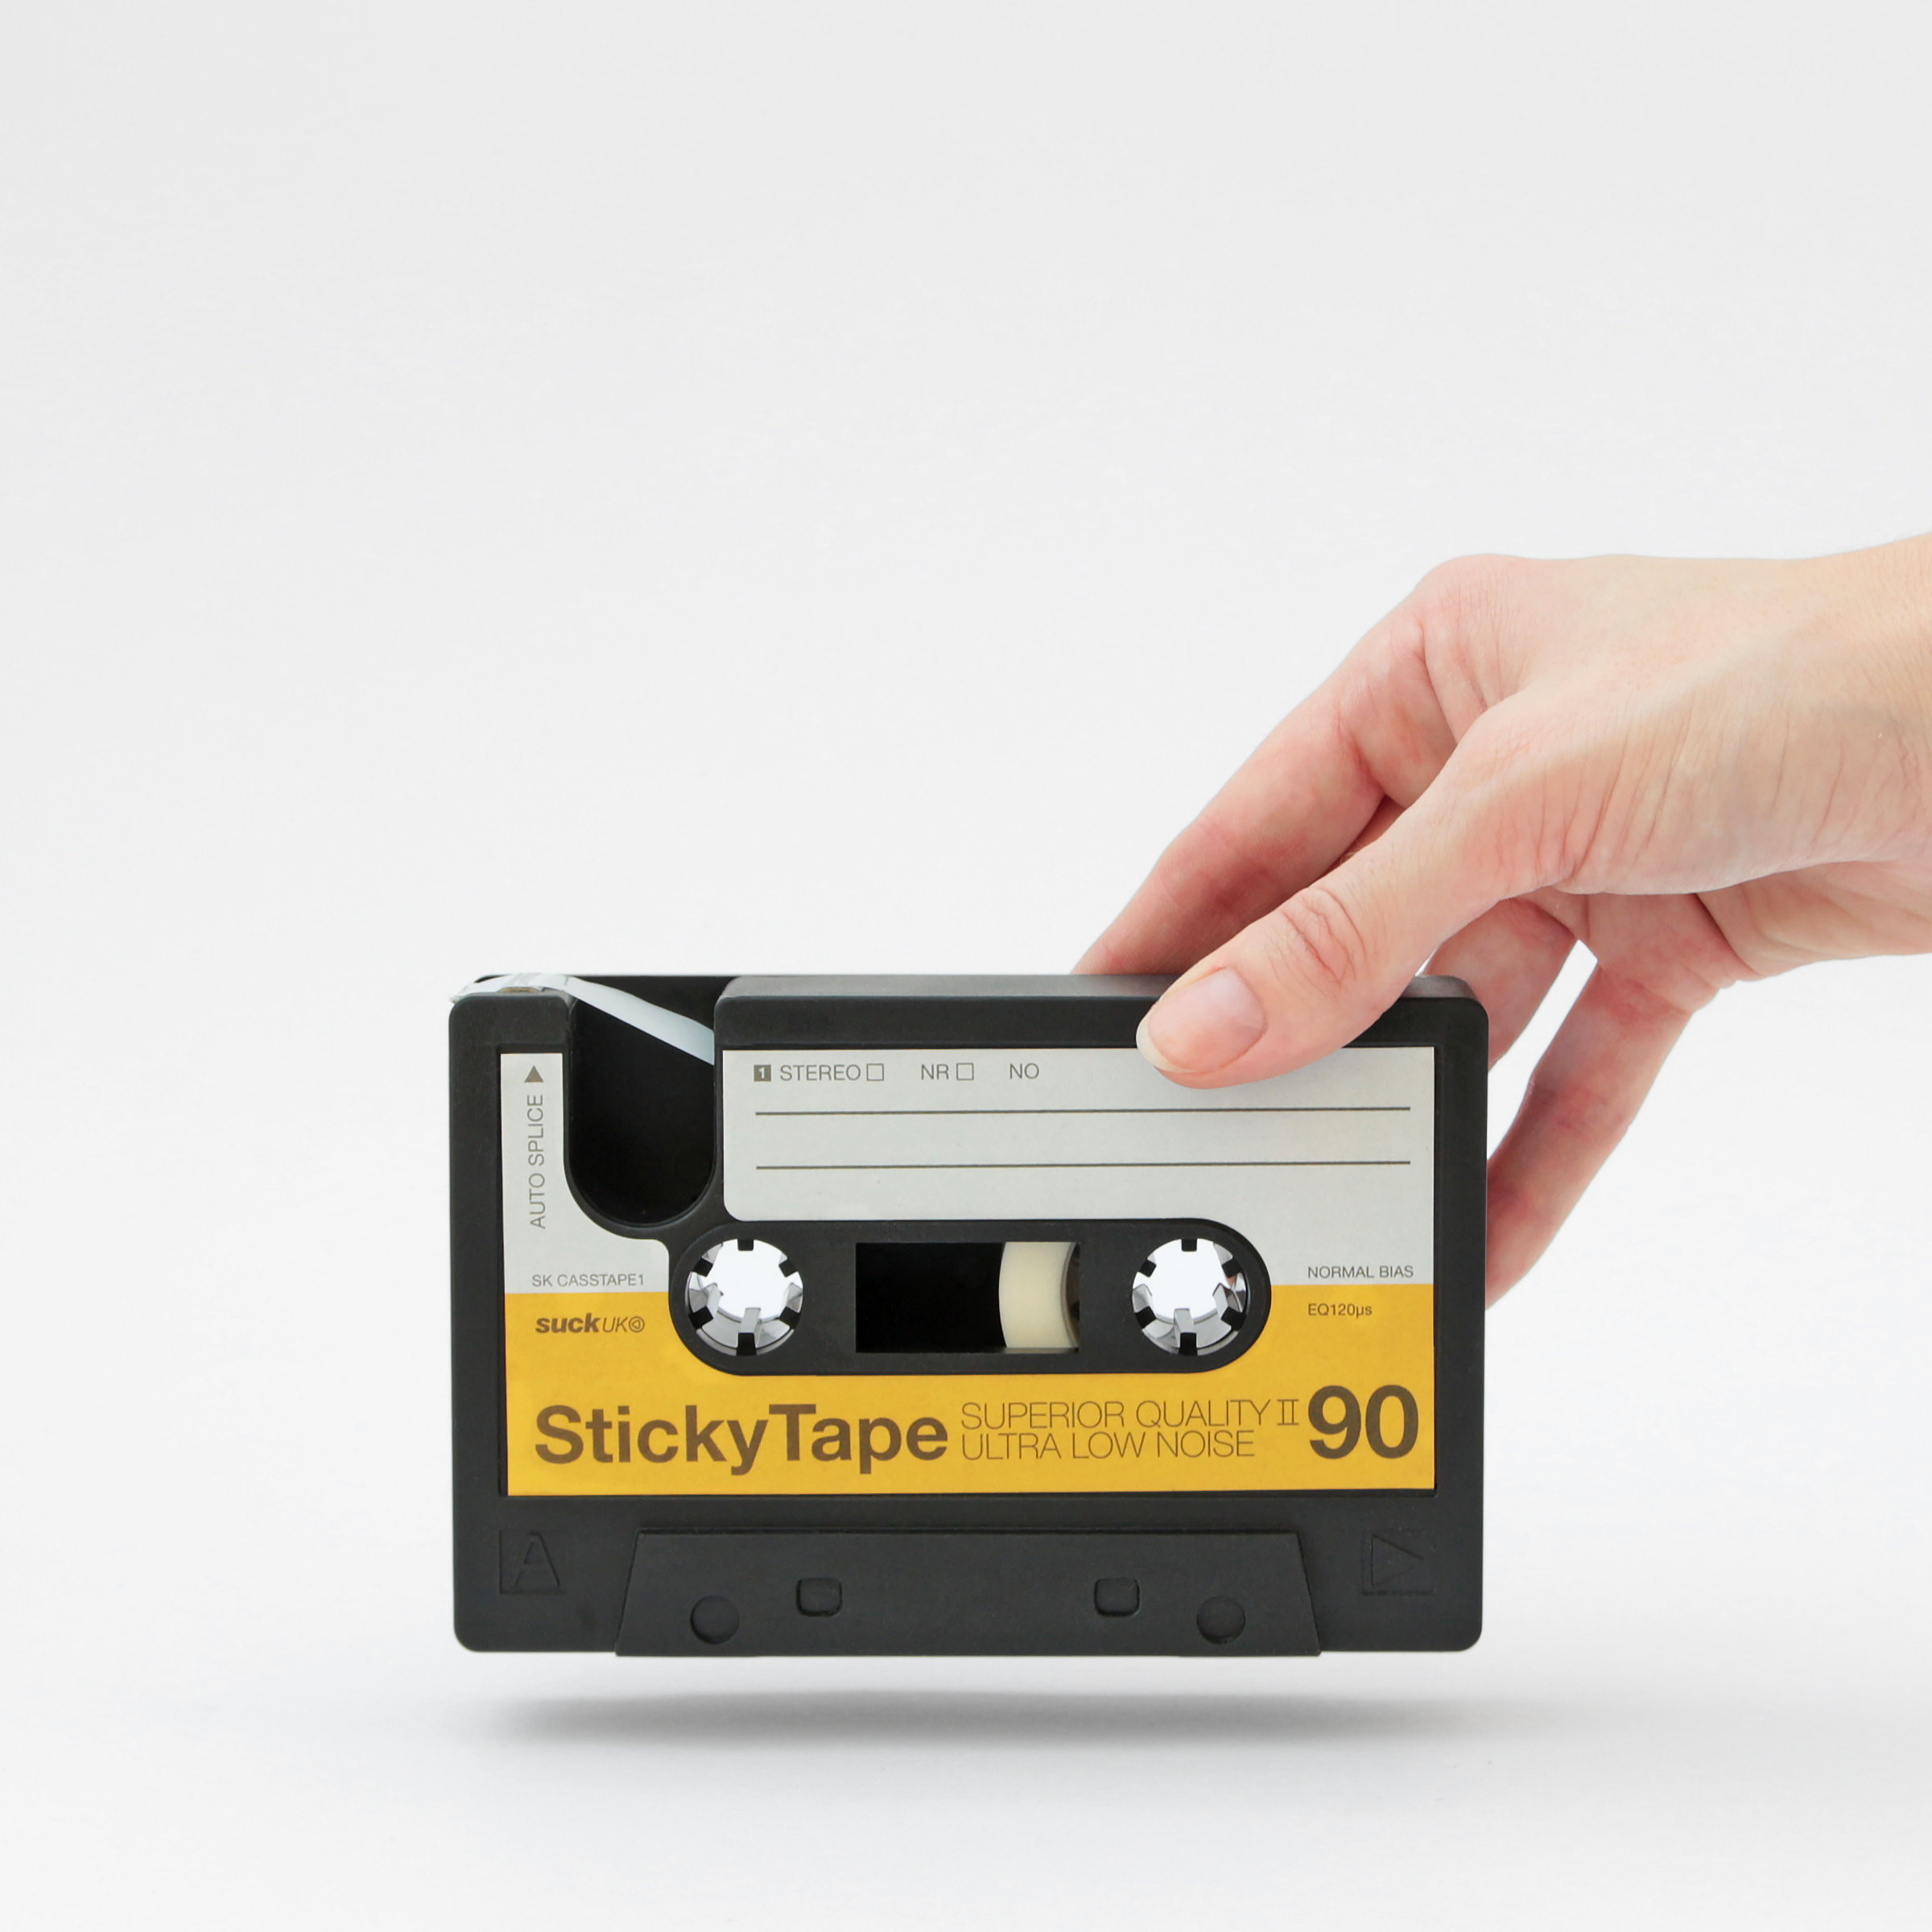 Stick-Tape-Dispenser Cassette. In Hand - for scale.